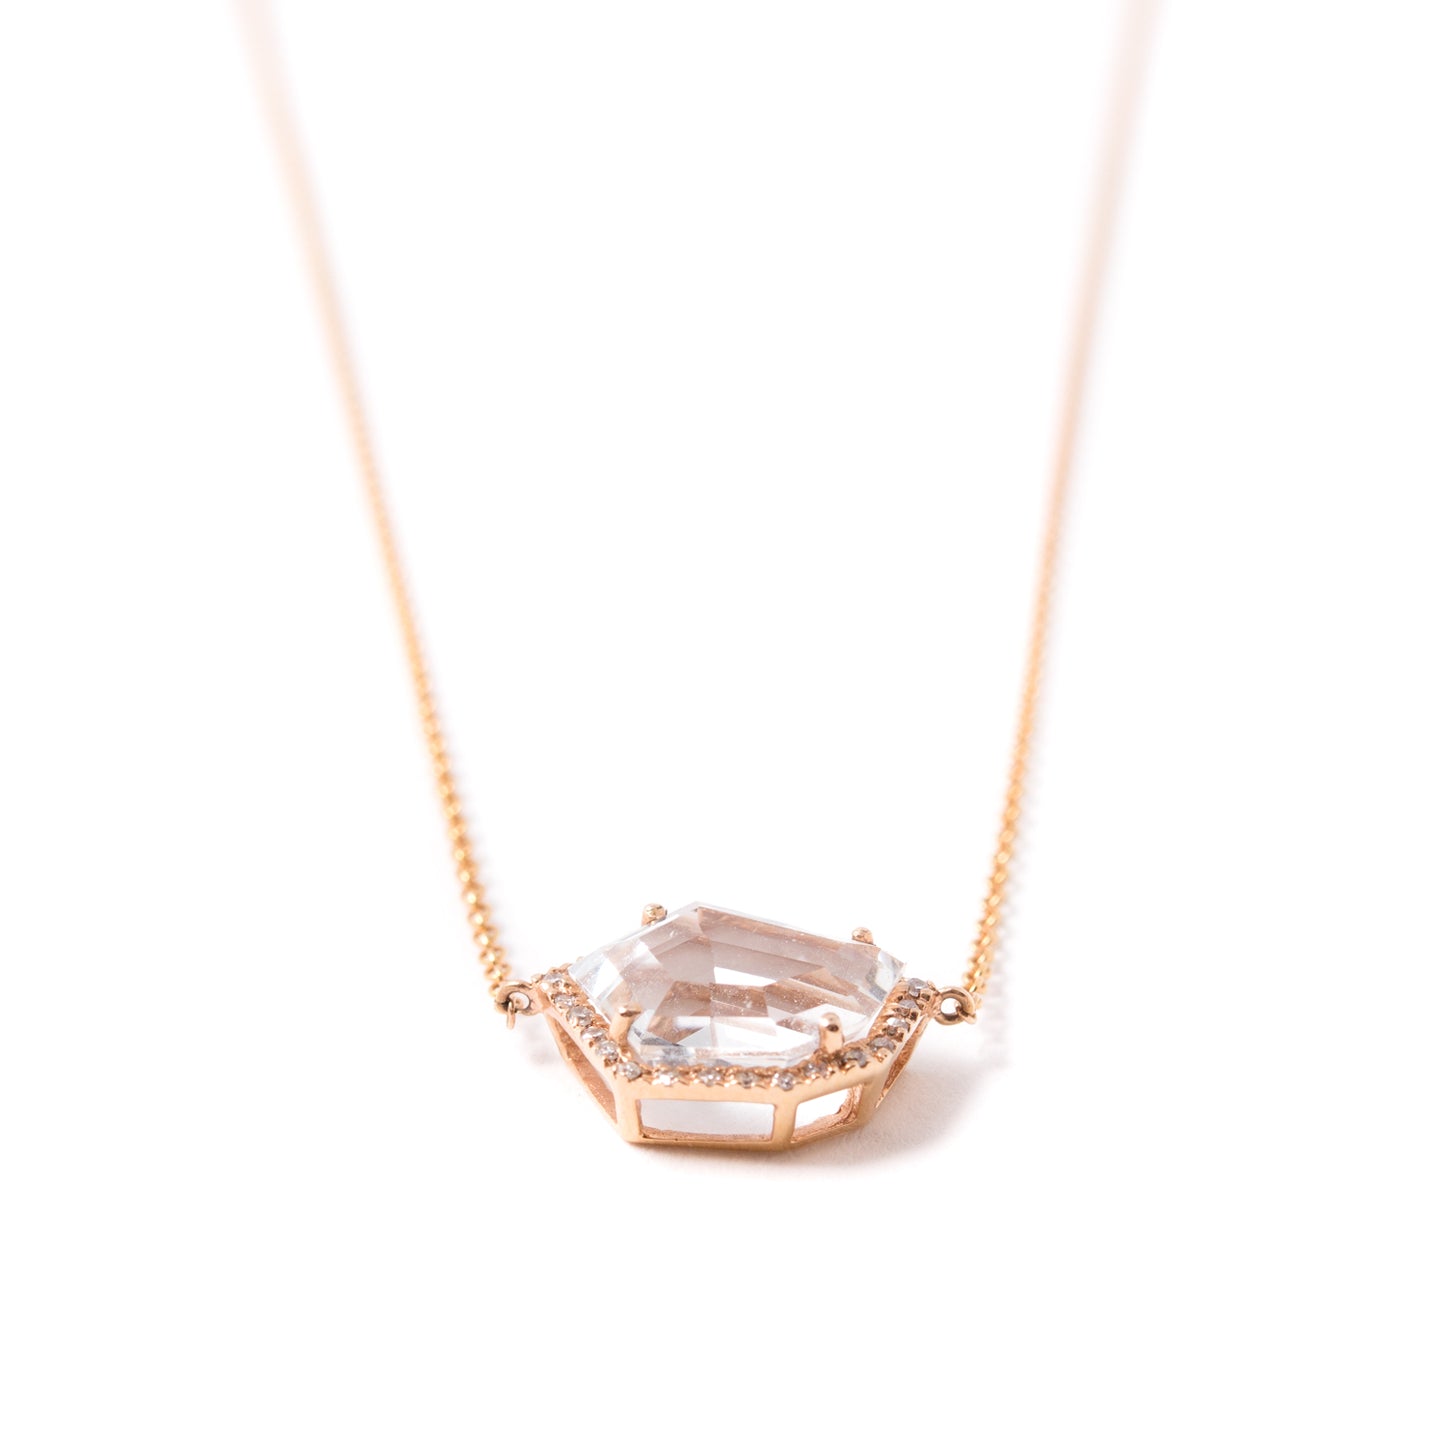 white topaz november birthstone necklace diamond pave 14k rose gold janna conner